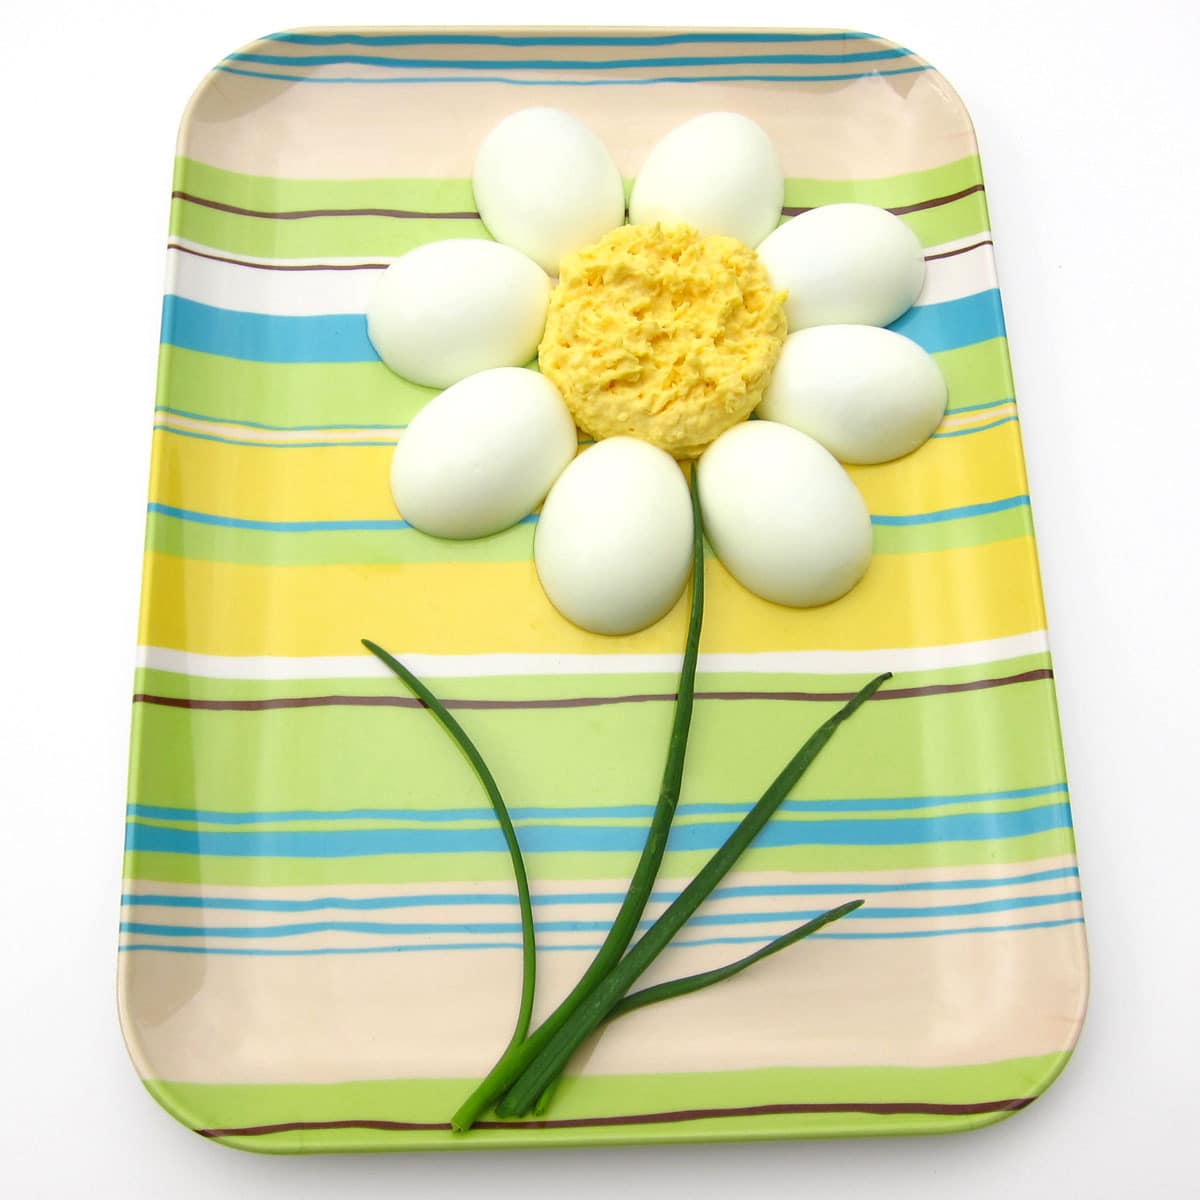 hard-boiled egg halves arranged around deviled egg filling forming a daisy. 